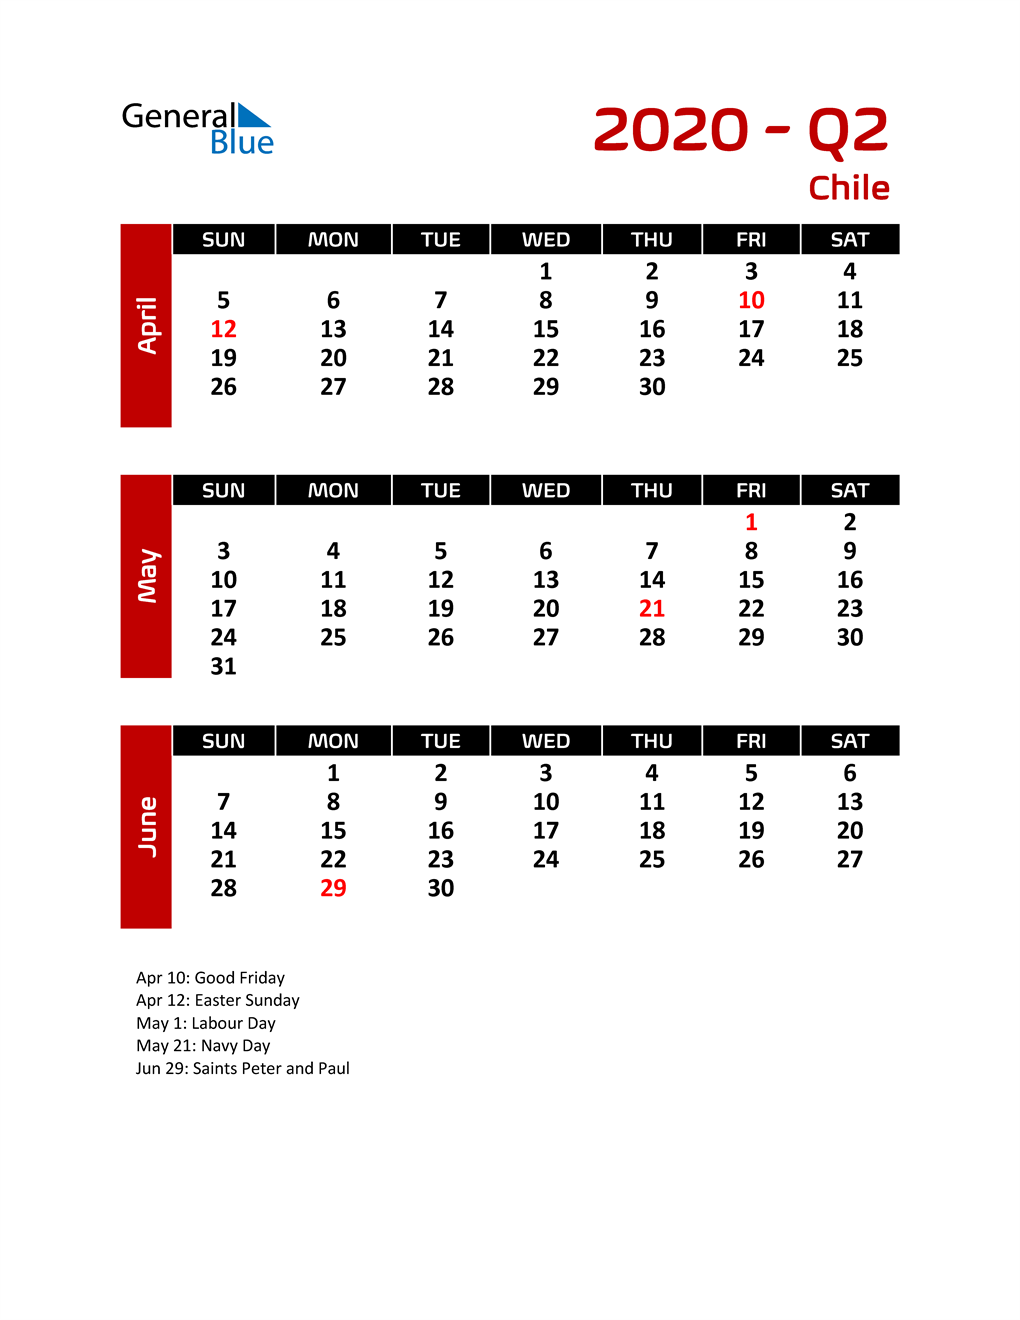  Q2 2020 Calendar with Holidays